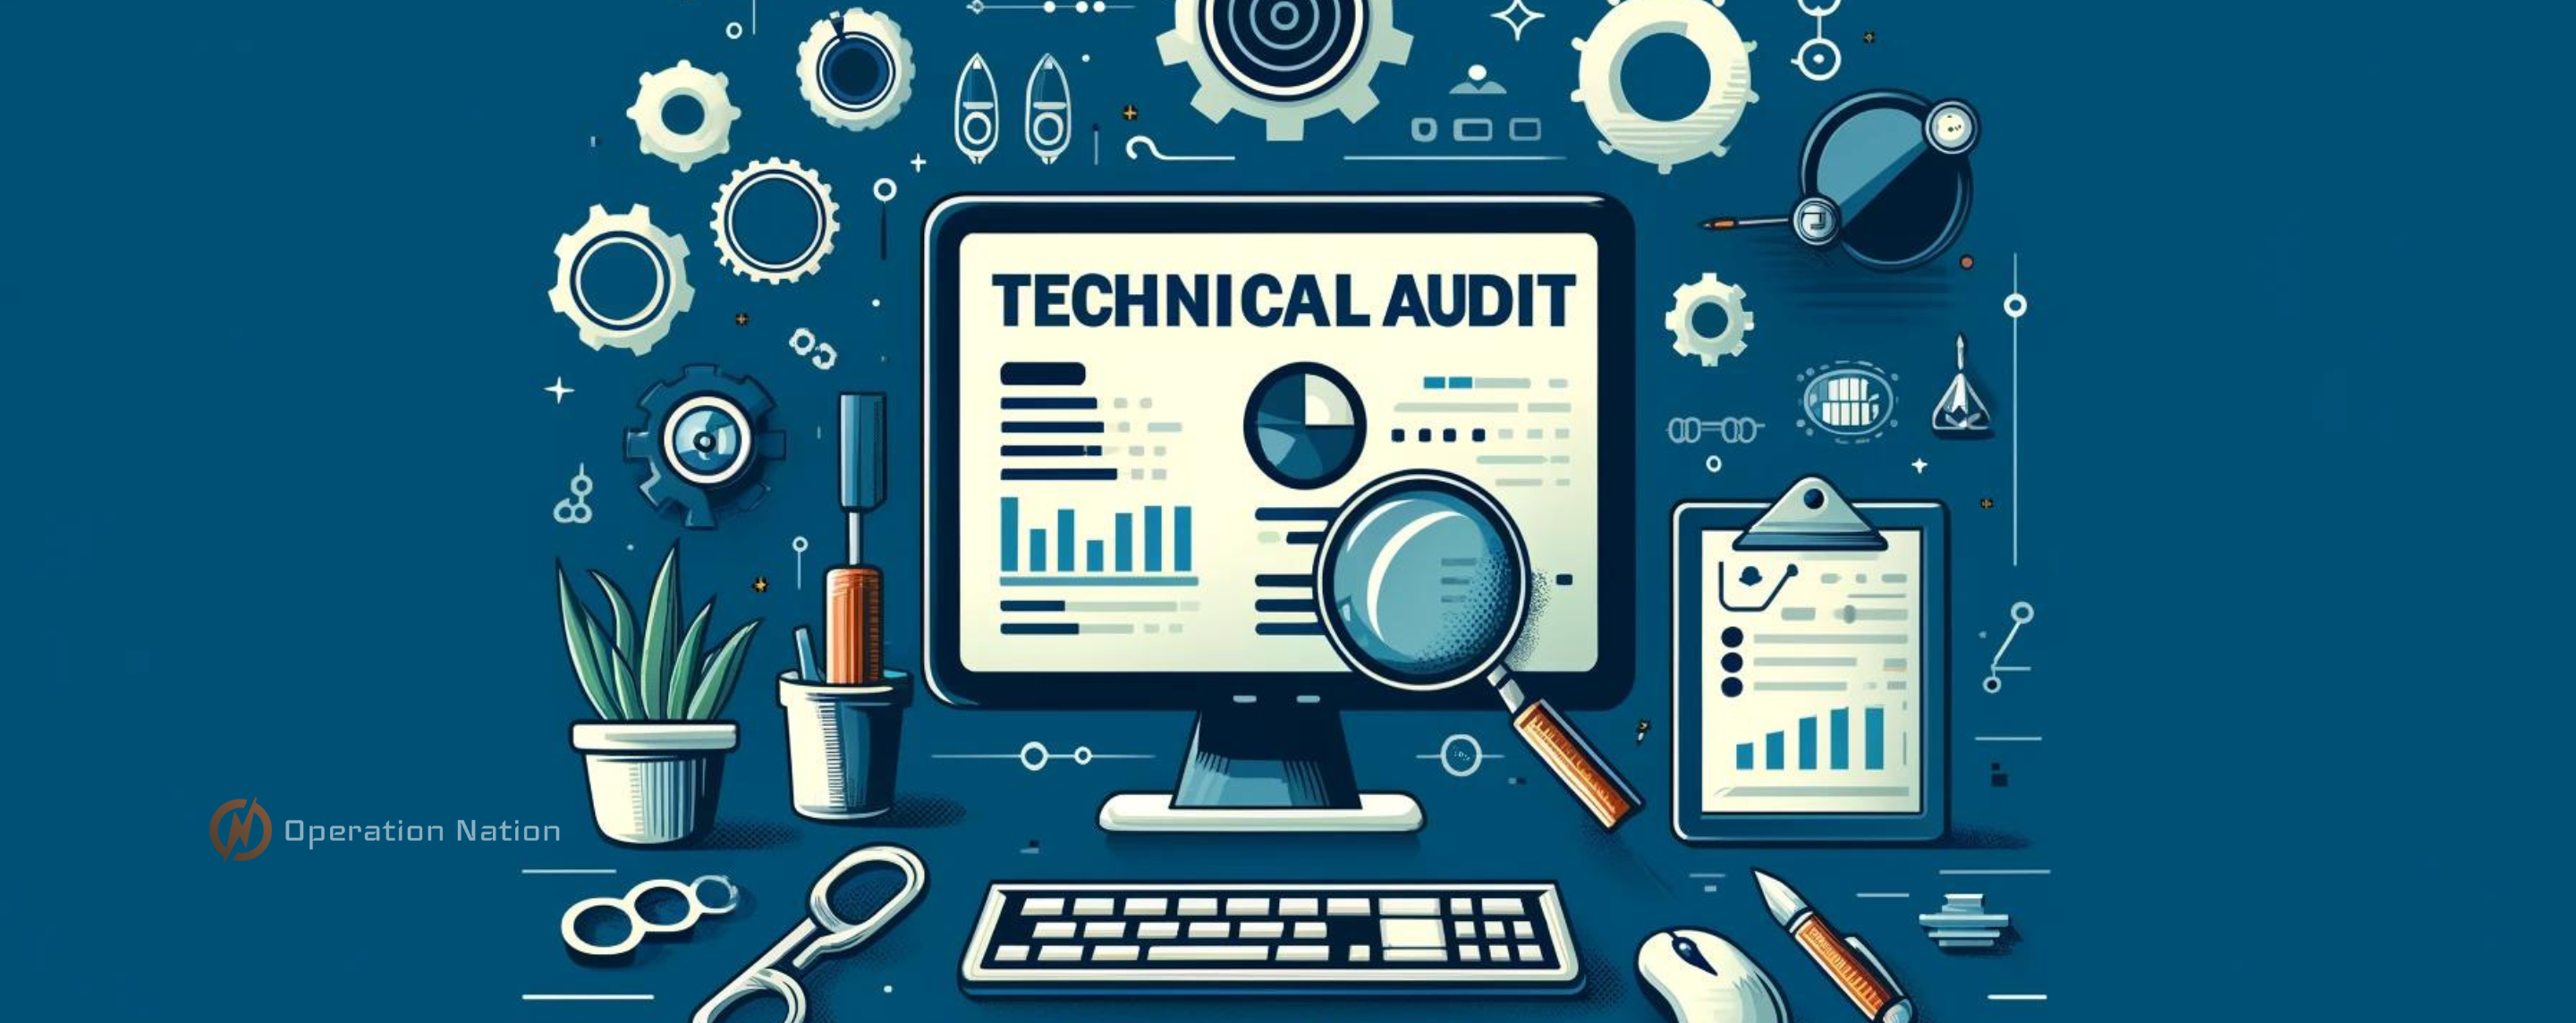 technical seo audit service - hero image